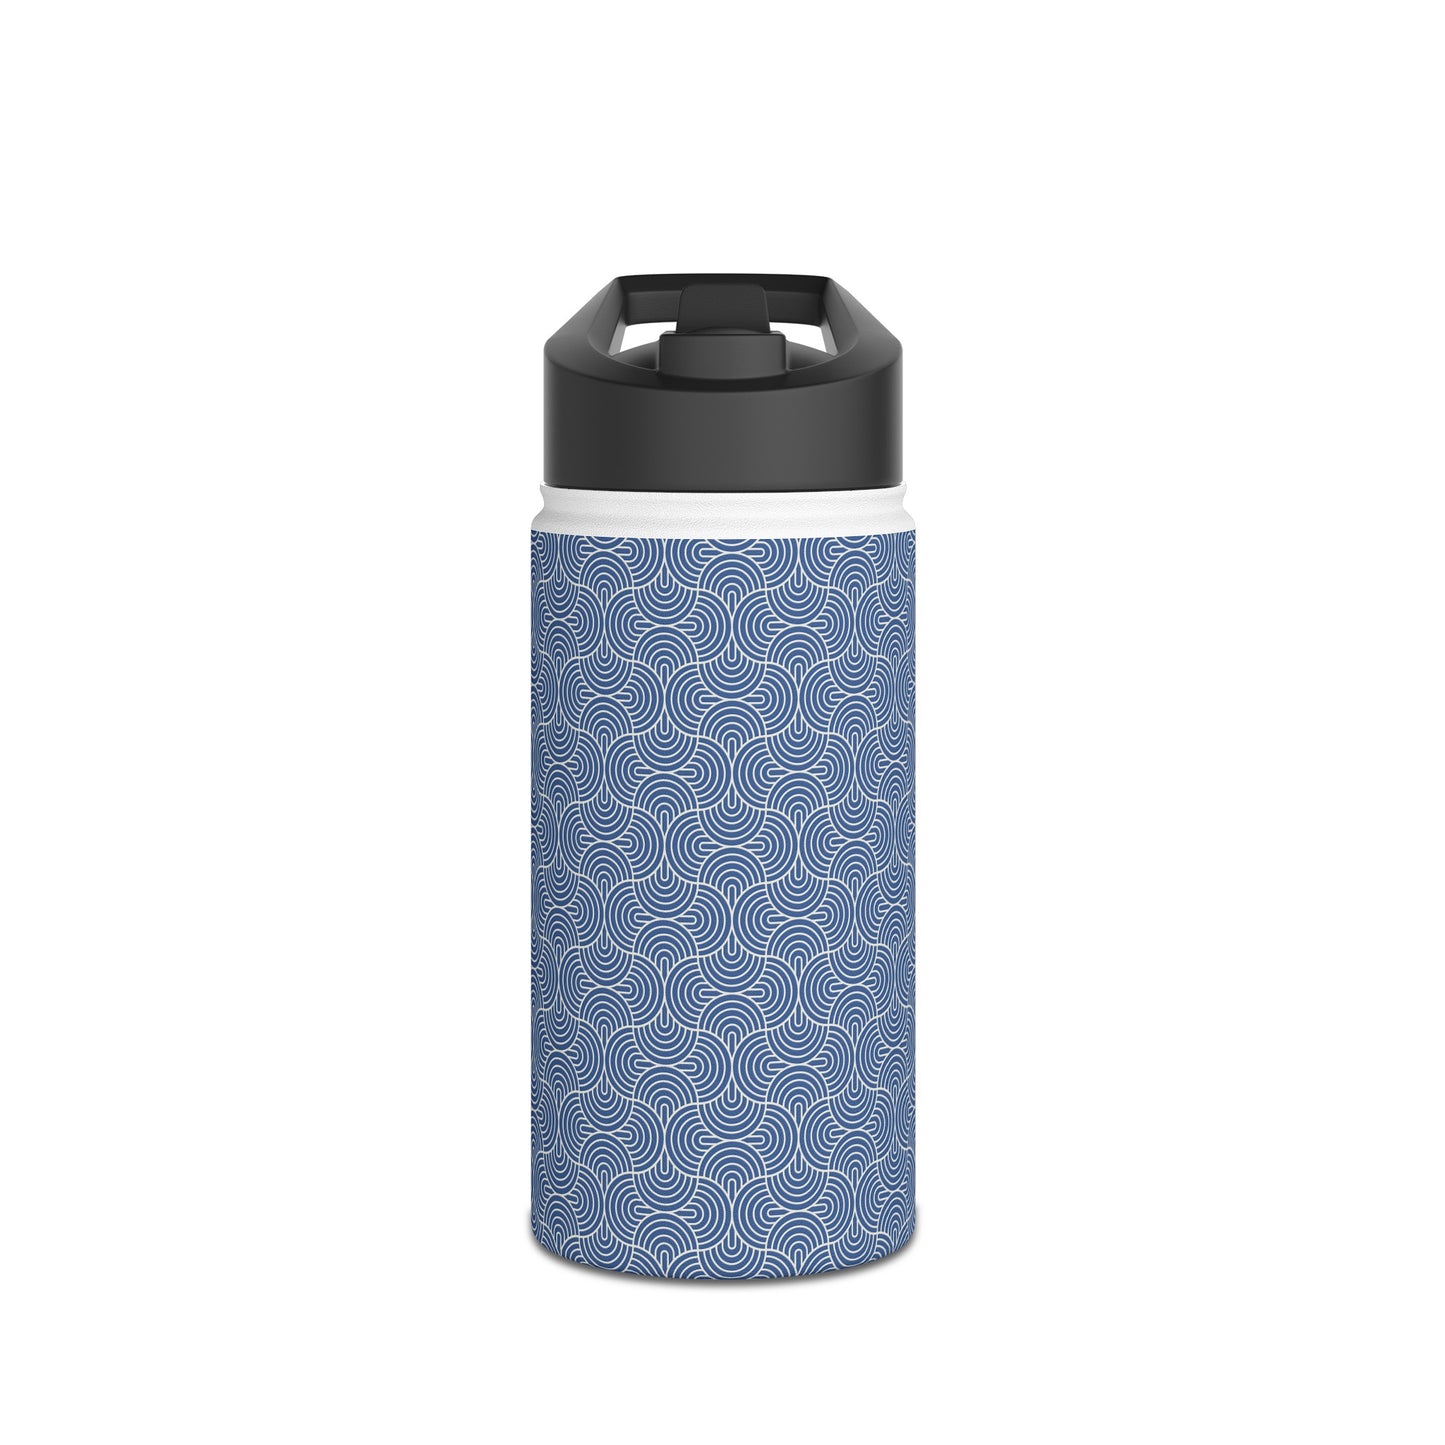 Mod Ovals - Cobalt Blue Stainless Steel Water Bottle, Standard Lid